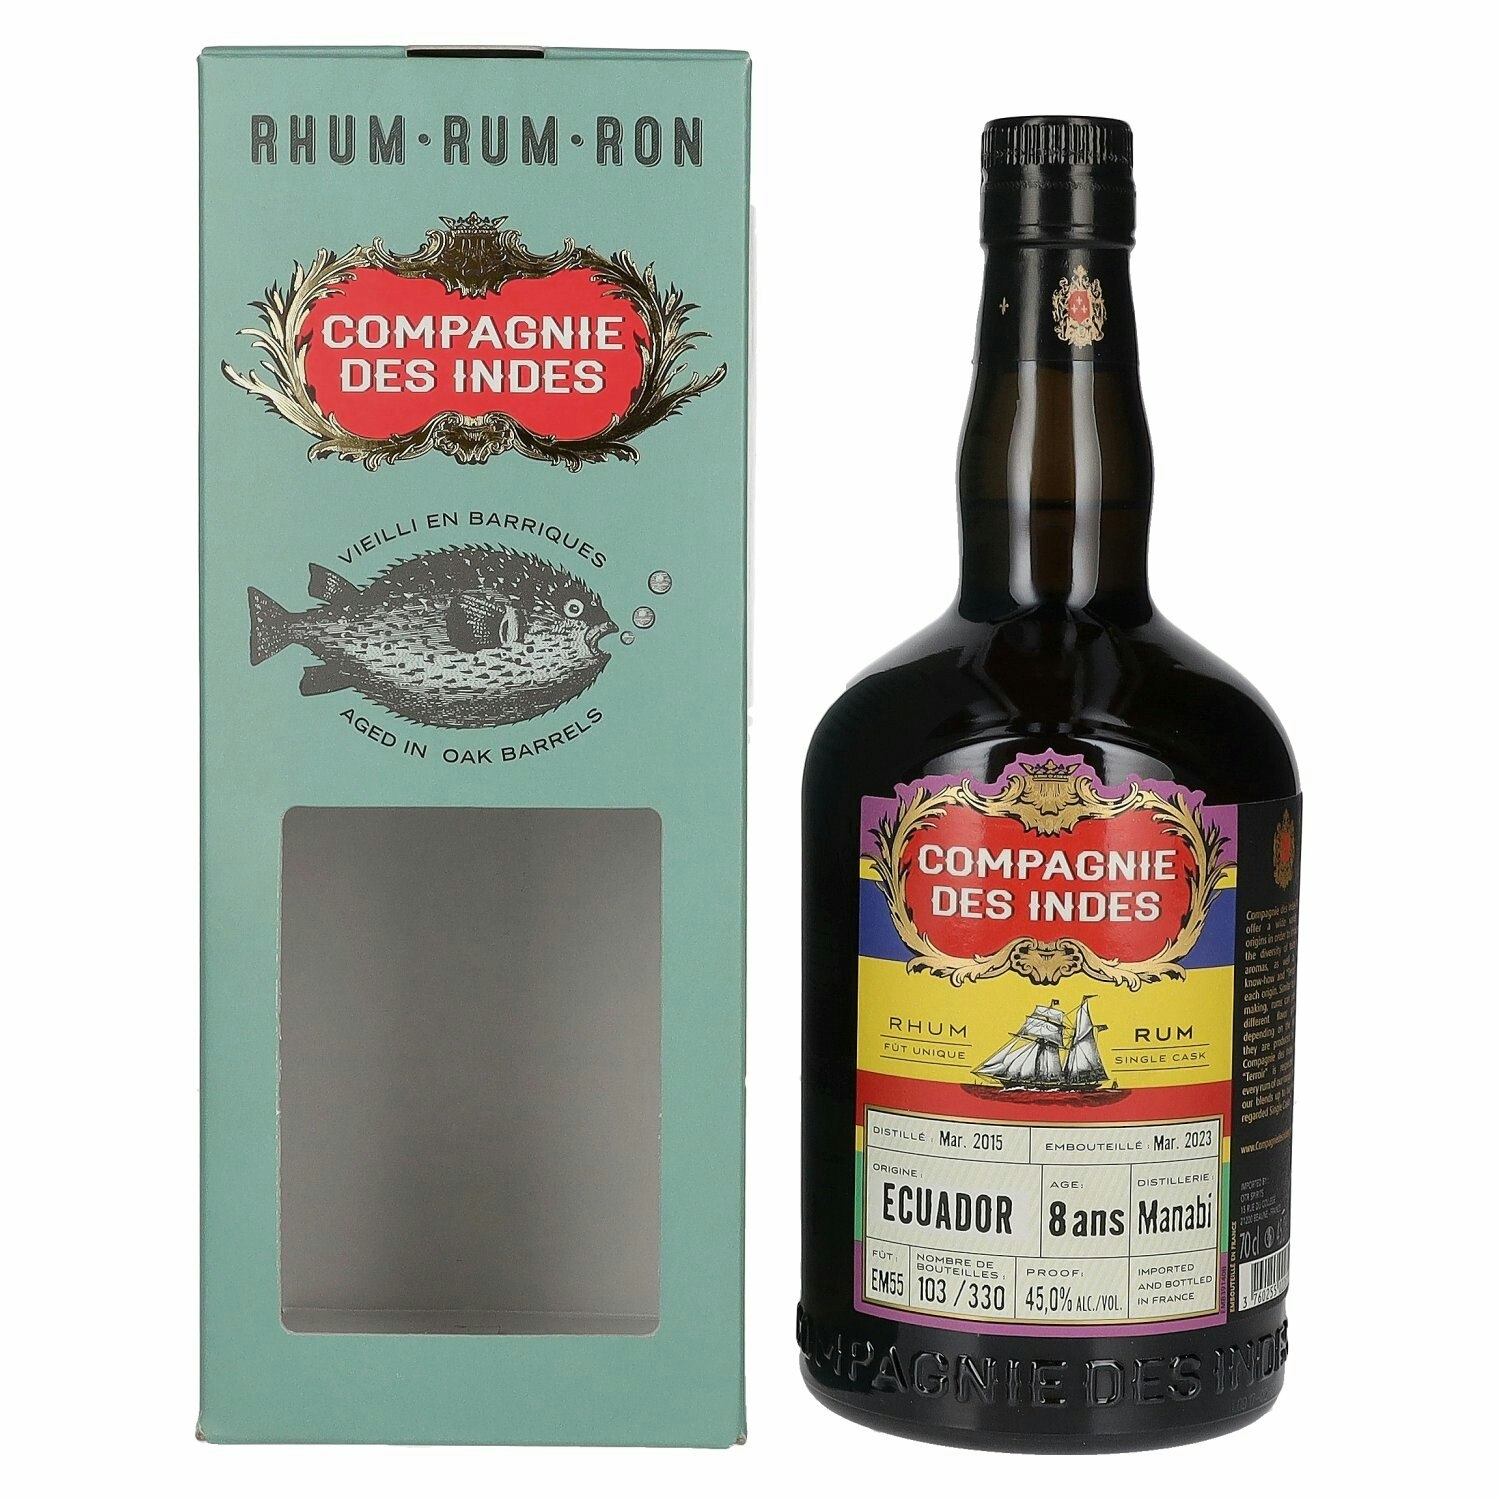 Compagnie des Indes Ecuador Manabi Rum Single Cask Strength 8 Years Old 2015 45% Vol. 0,7l in Giftbox